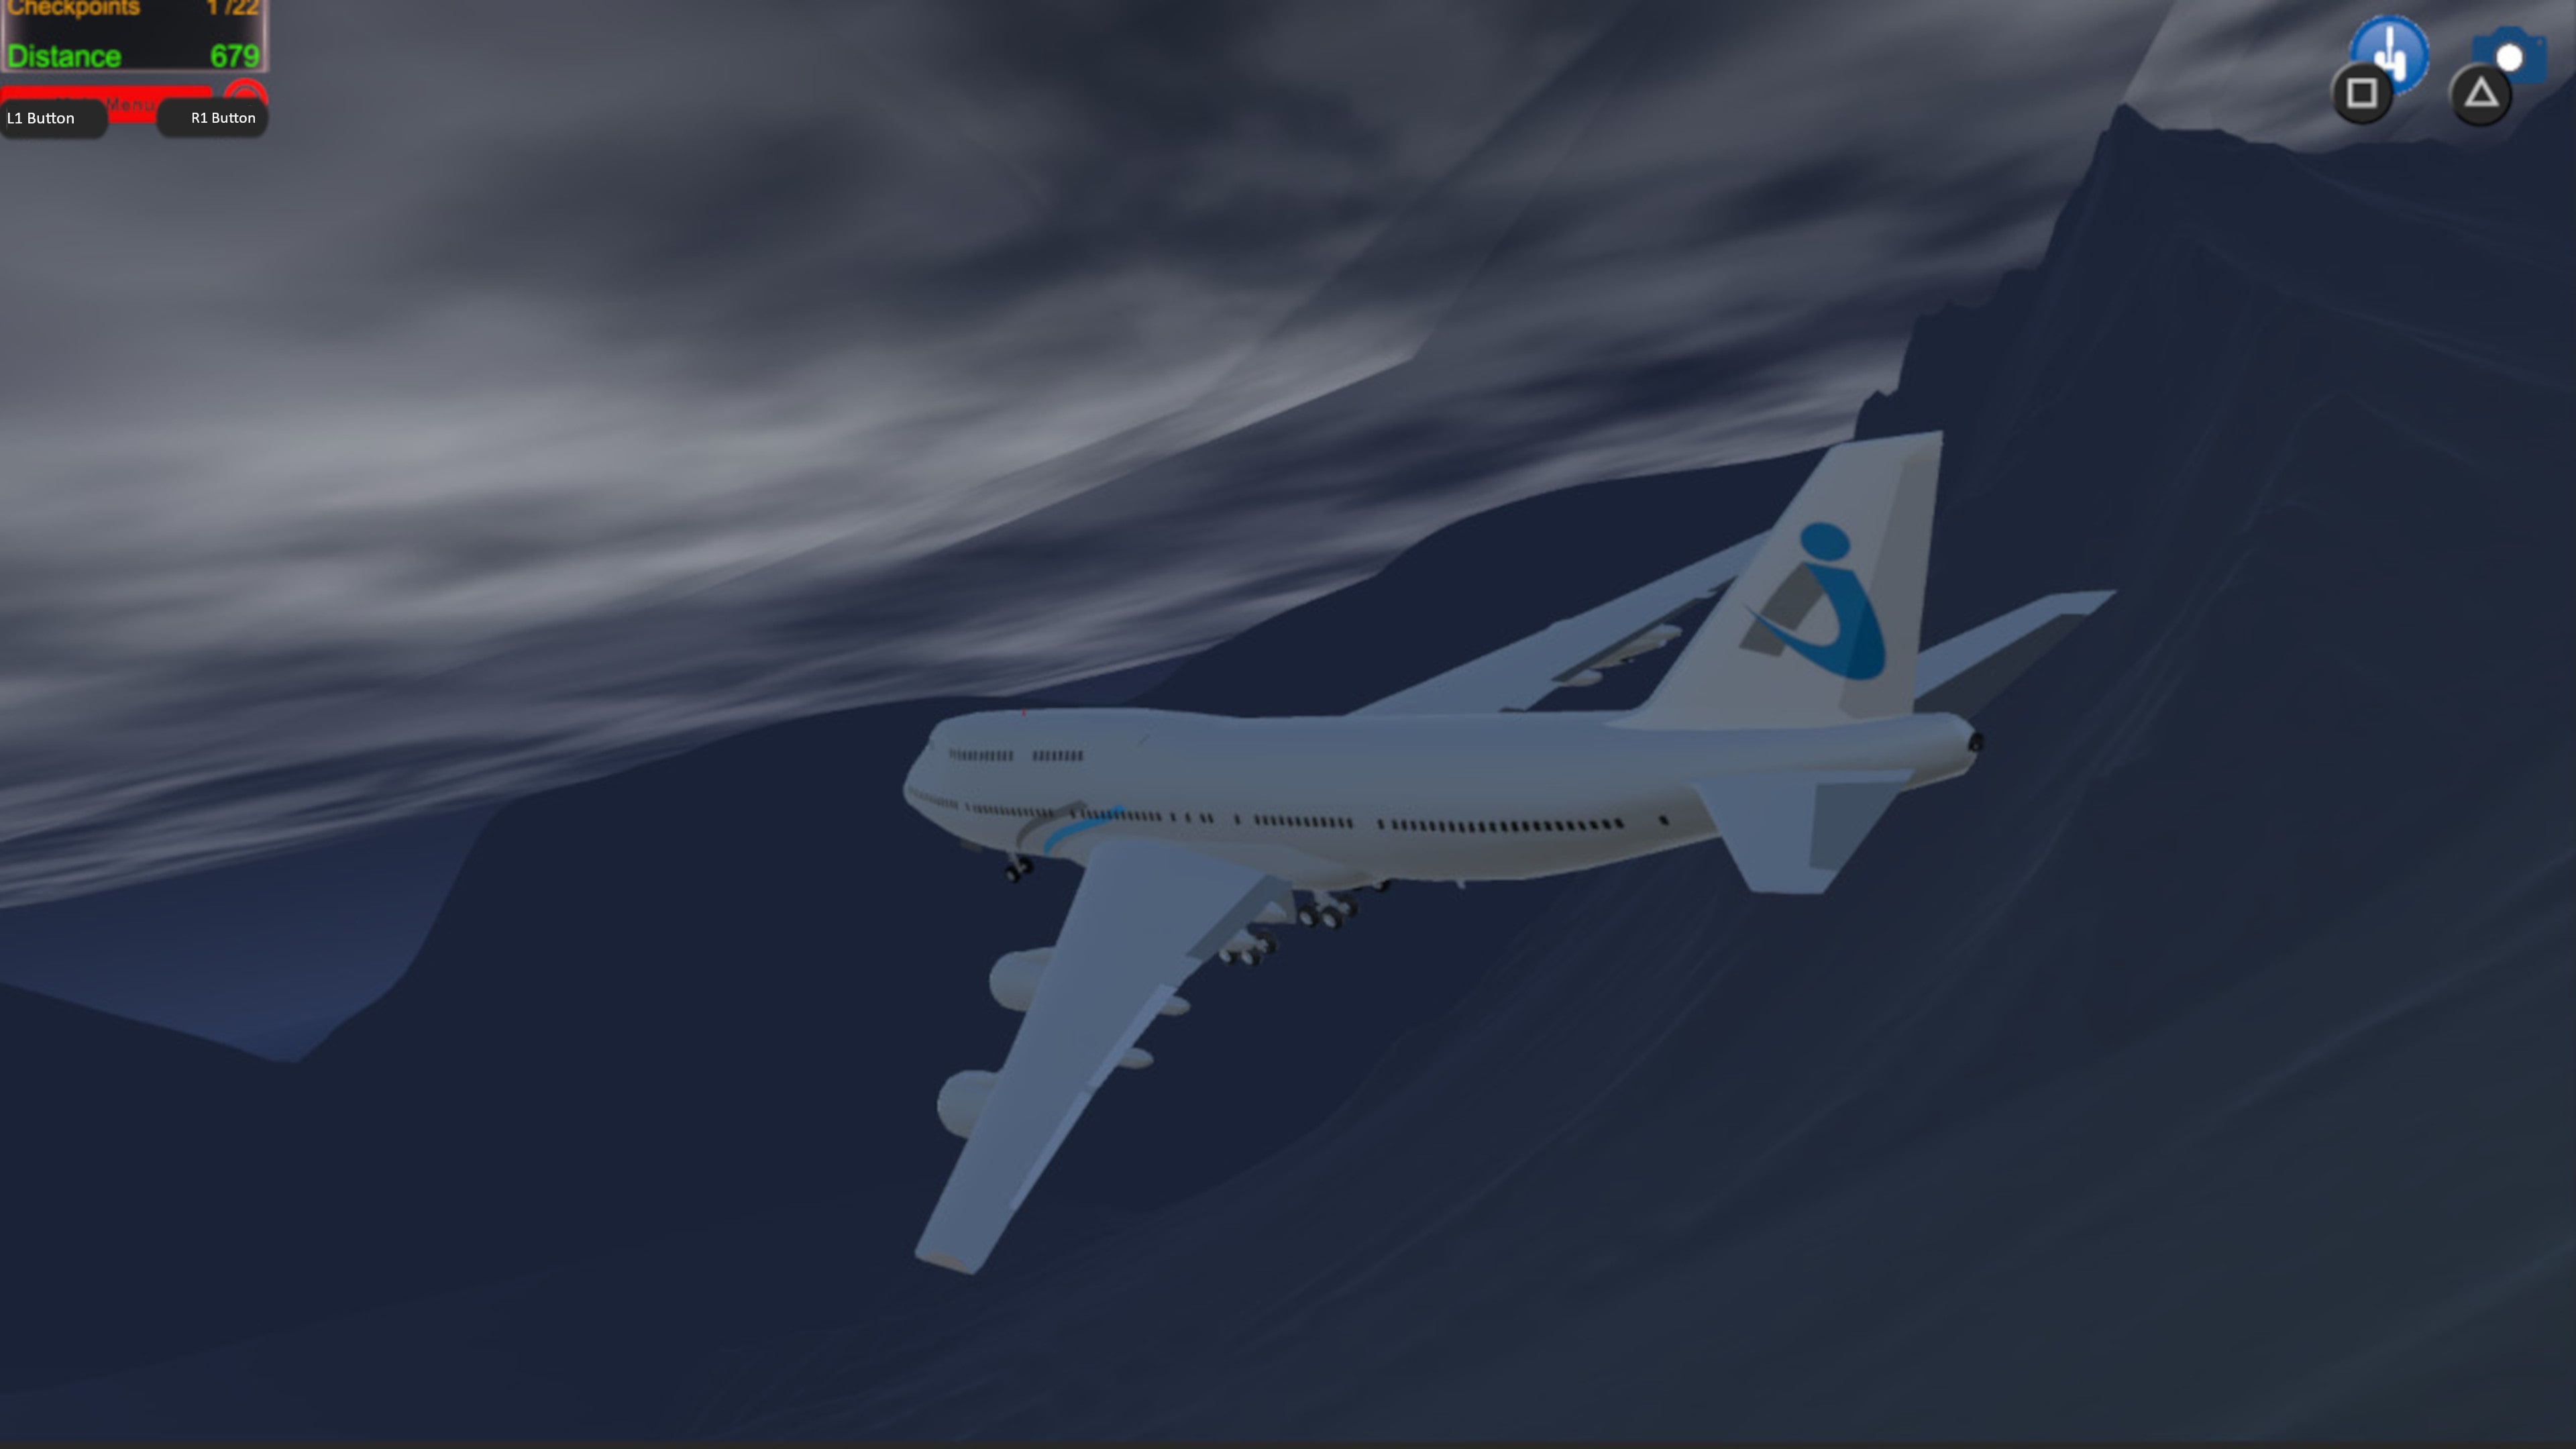  Ps4 Flight Simulator Games